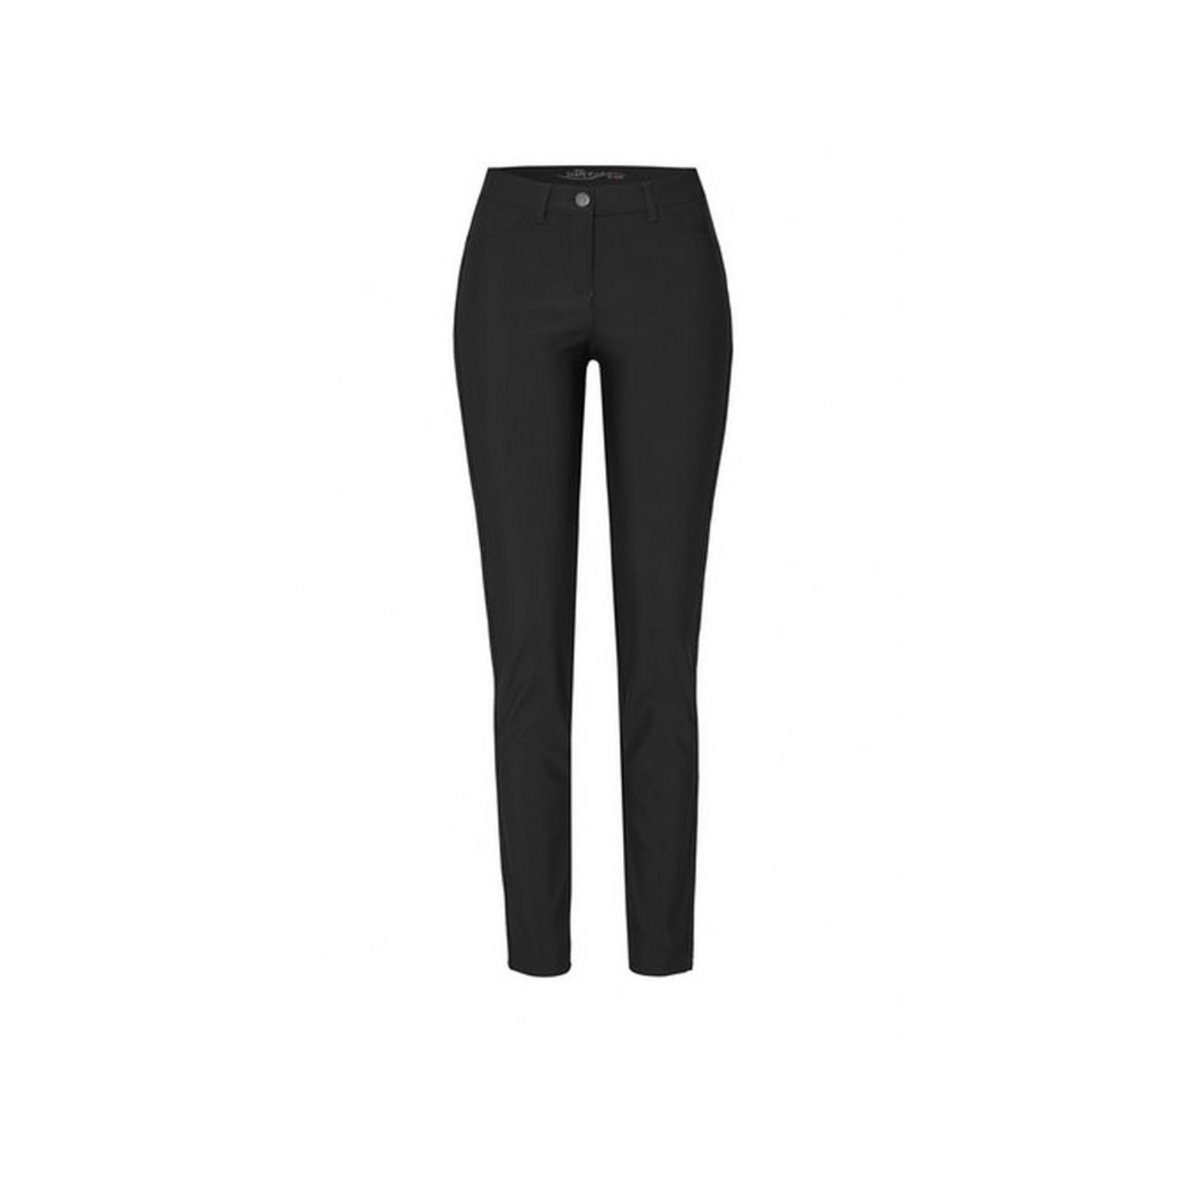 TONI (1-tlg) schwarz 5-Pocket-Jeans